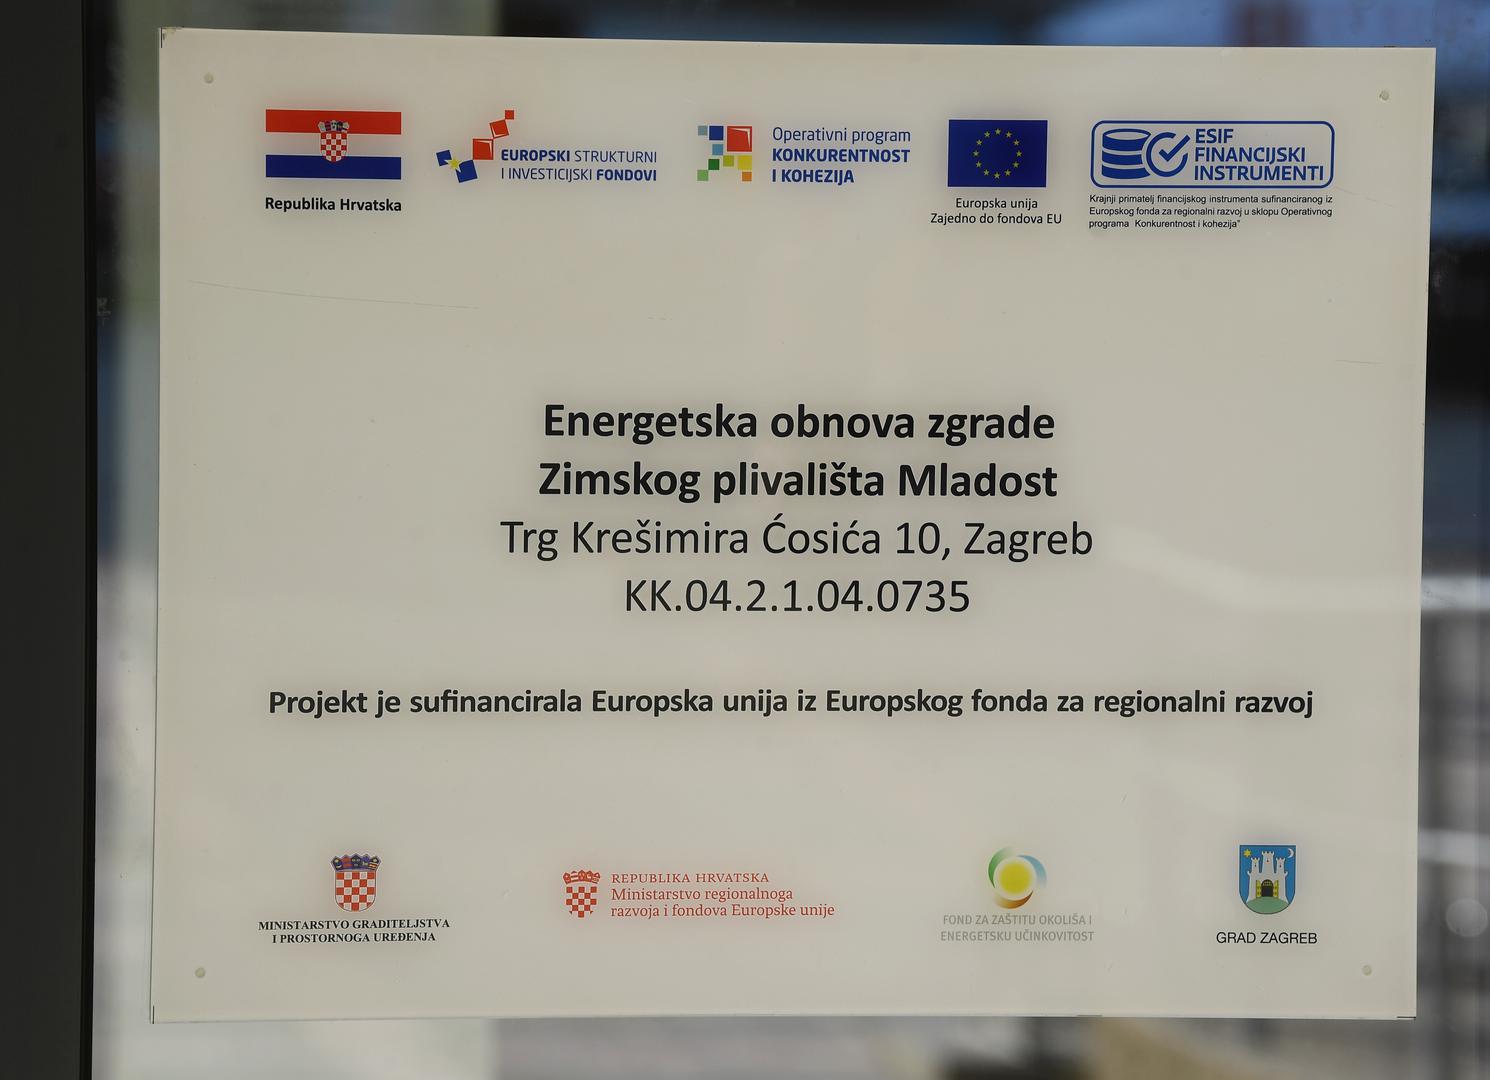 15.09.2021., Zagreb - Zimsko plivaliste Mladost nakon zavrsetka energetske obnove danas otvorilo svoja vrata za gradjane. 
Photo: Marko Lukunic/PIXSELL